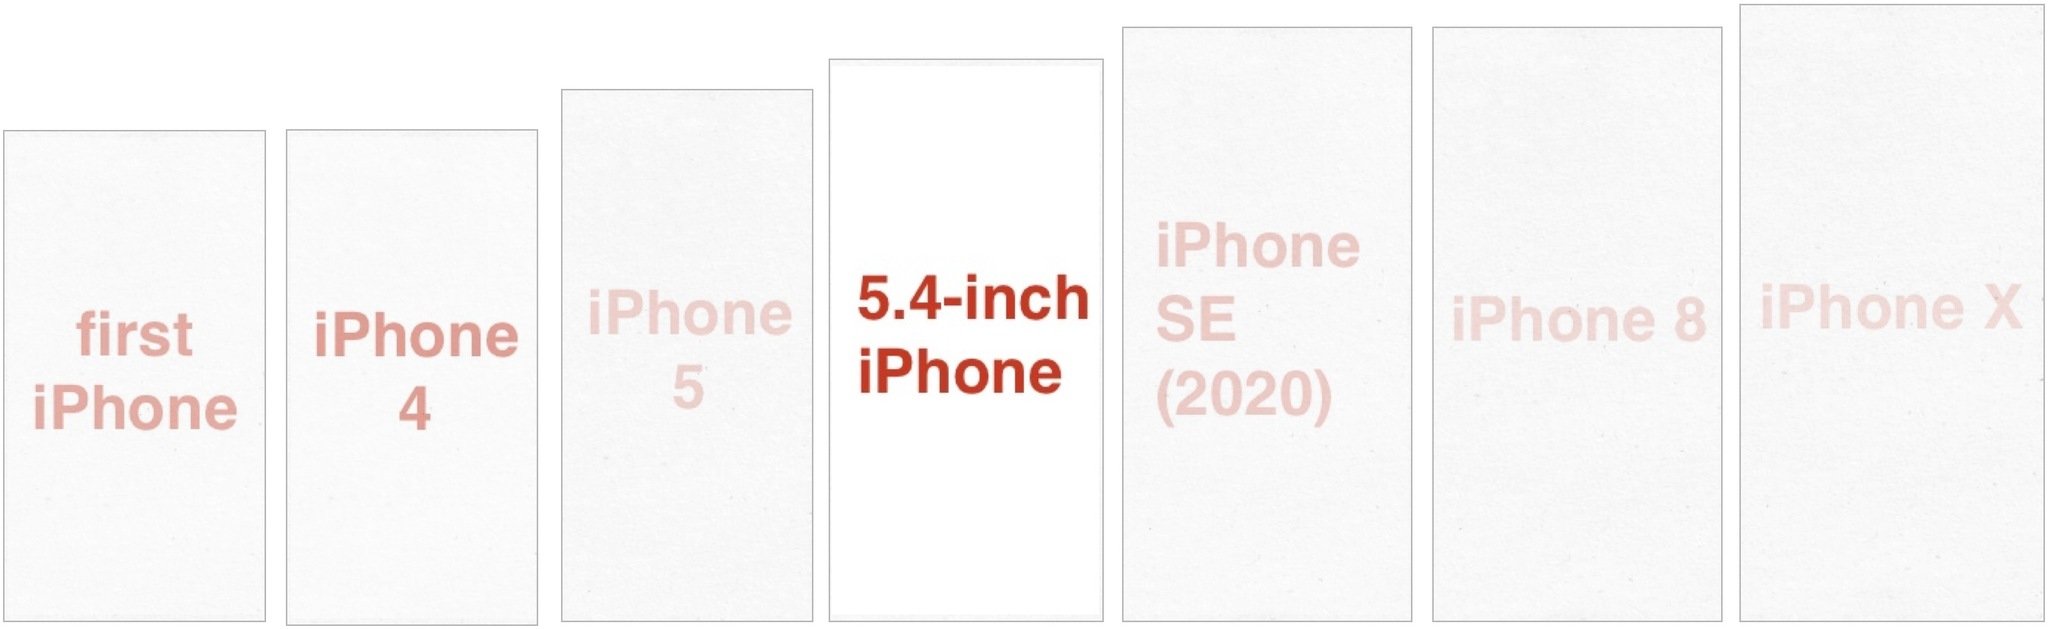 iPhone comparisons